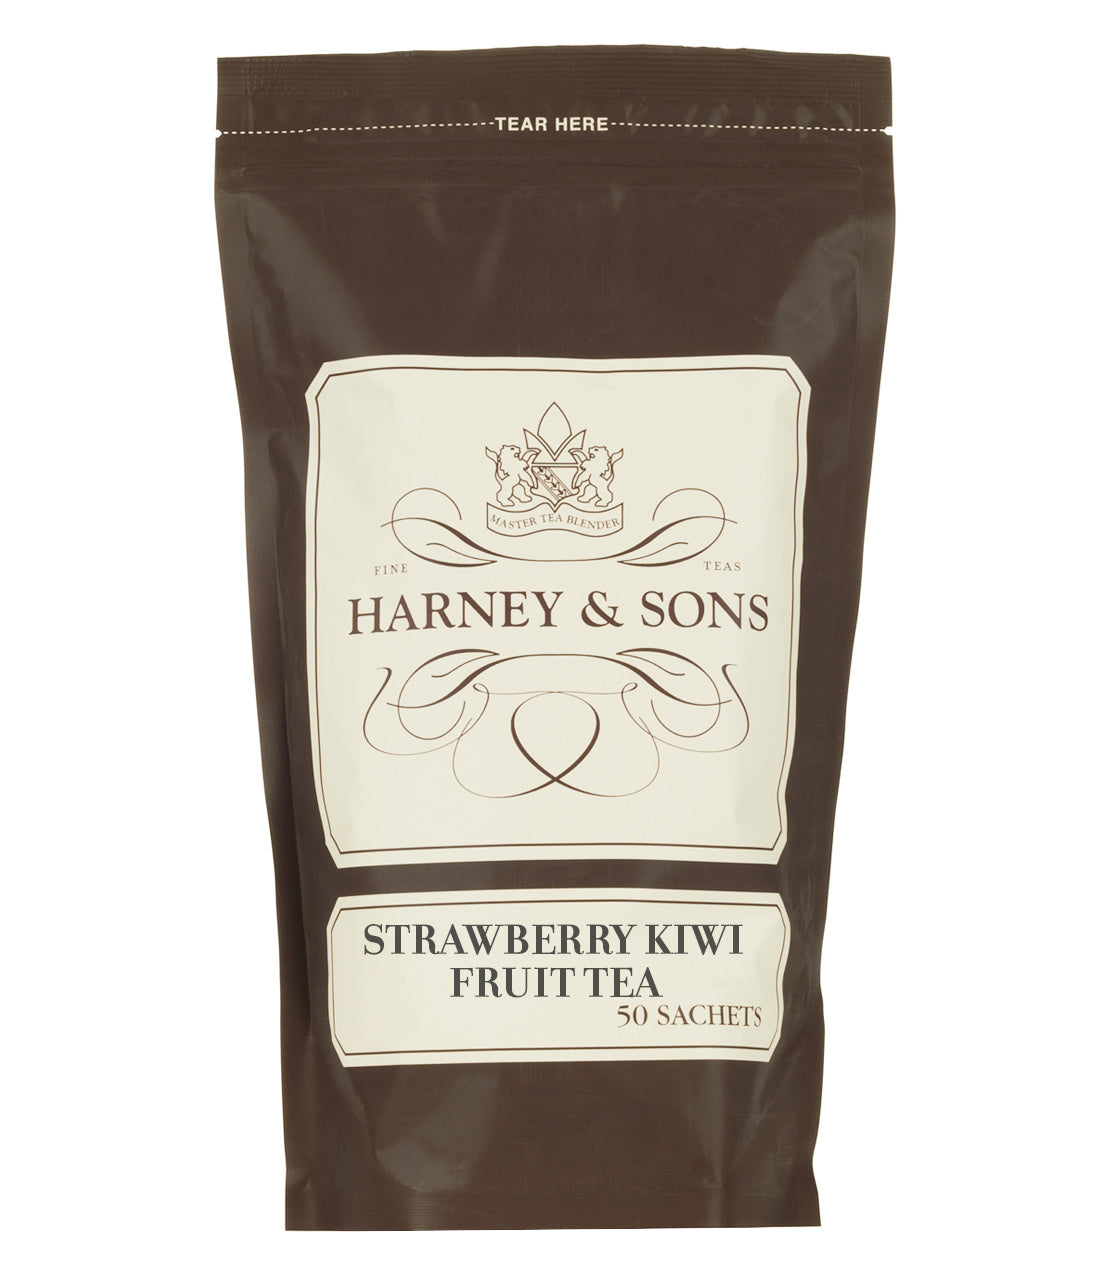 Strawberry Kiwi Fruit Tea, Bag of 50 Sachets - Sachets Bag of 50 Sachets - Harney & Sons Fine Teas